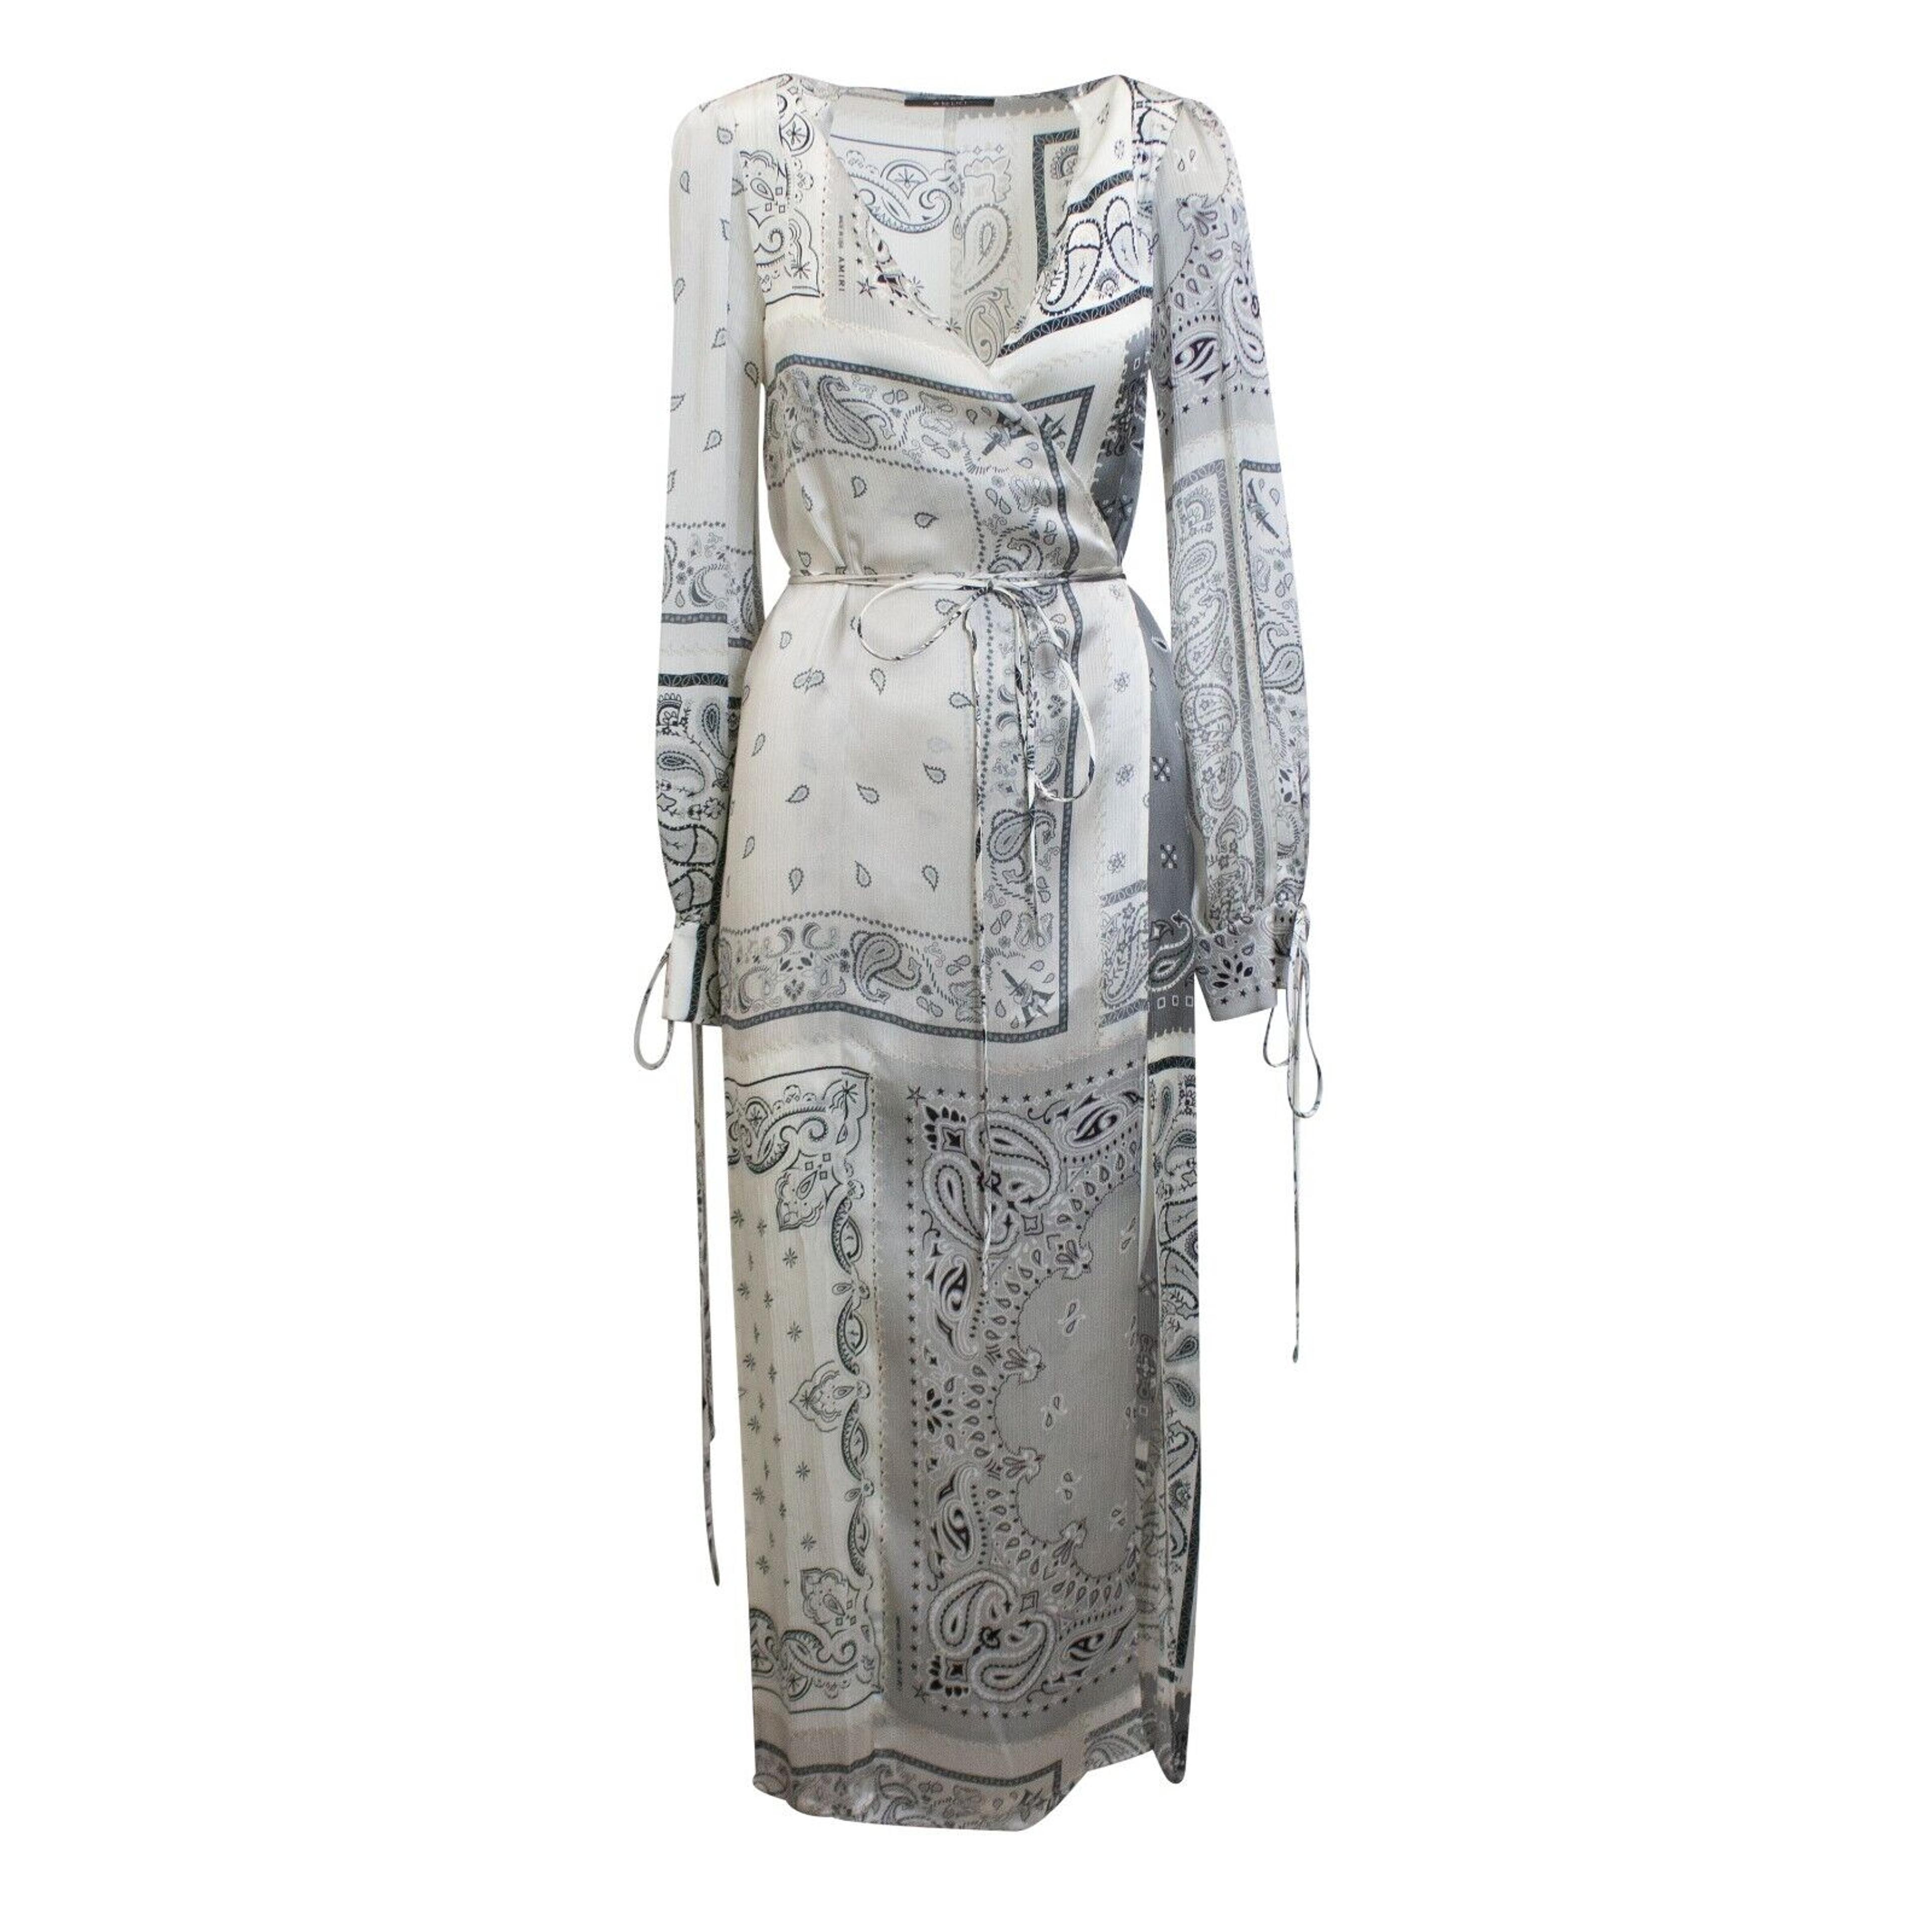 Alternate View 1 of Grey Bandana Recon Kimono Dress